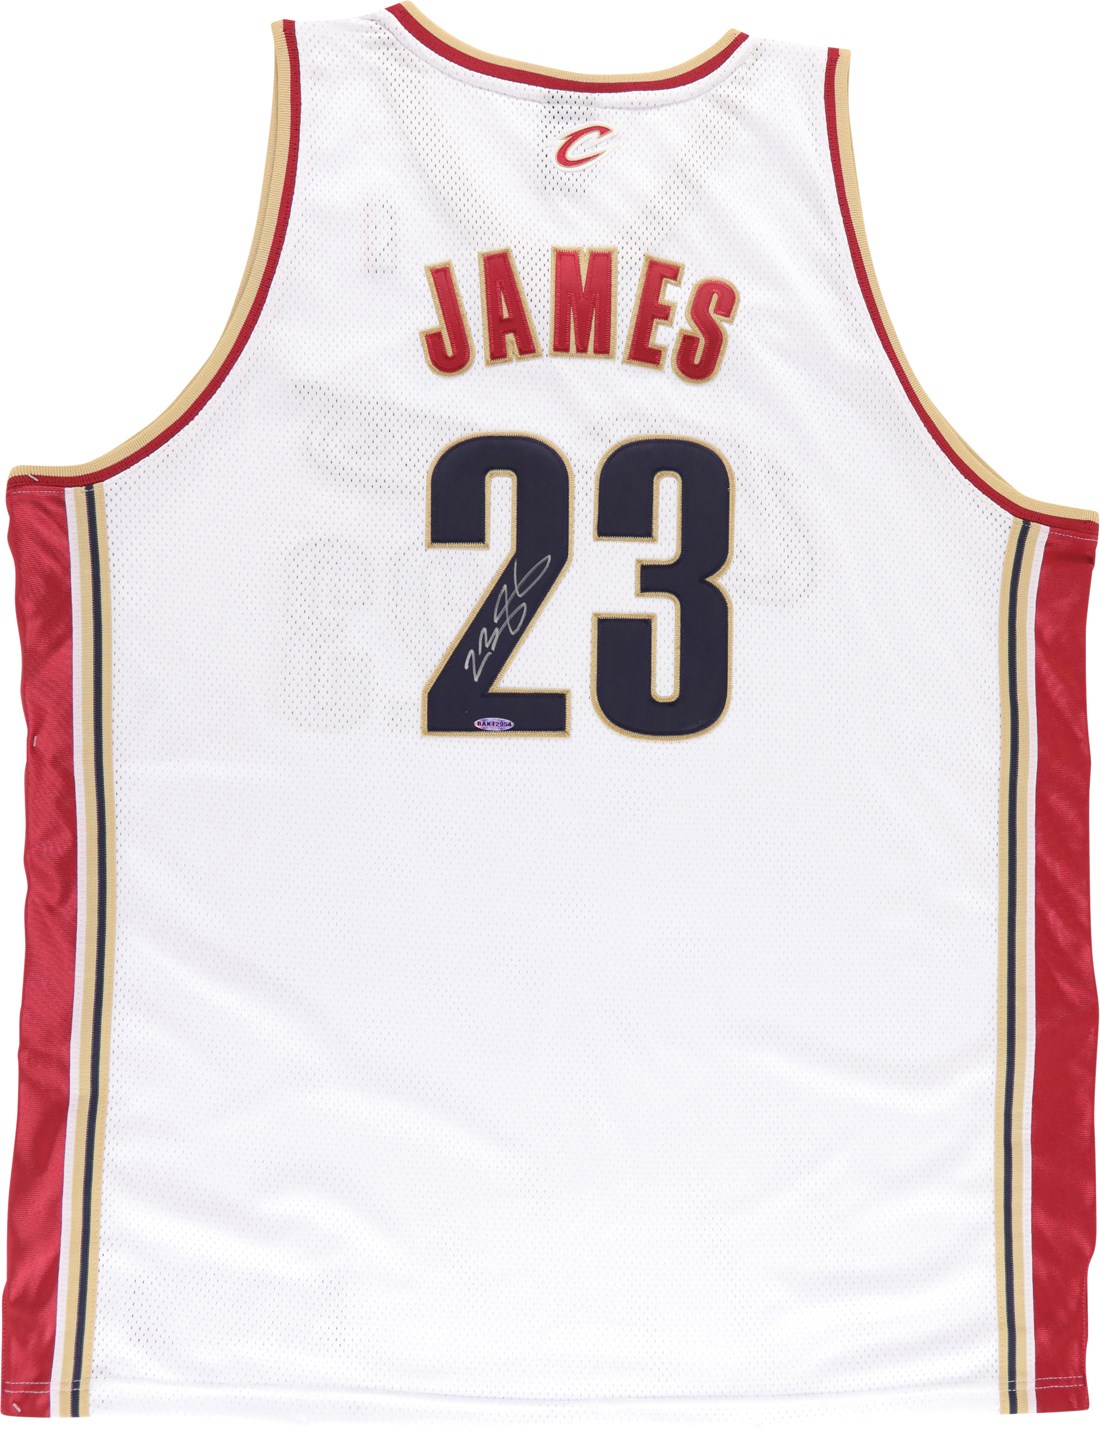 2003 LeBron James Signed Cleveland Cavaliers Jersey (UDA)